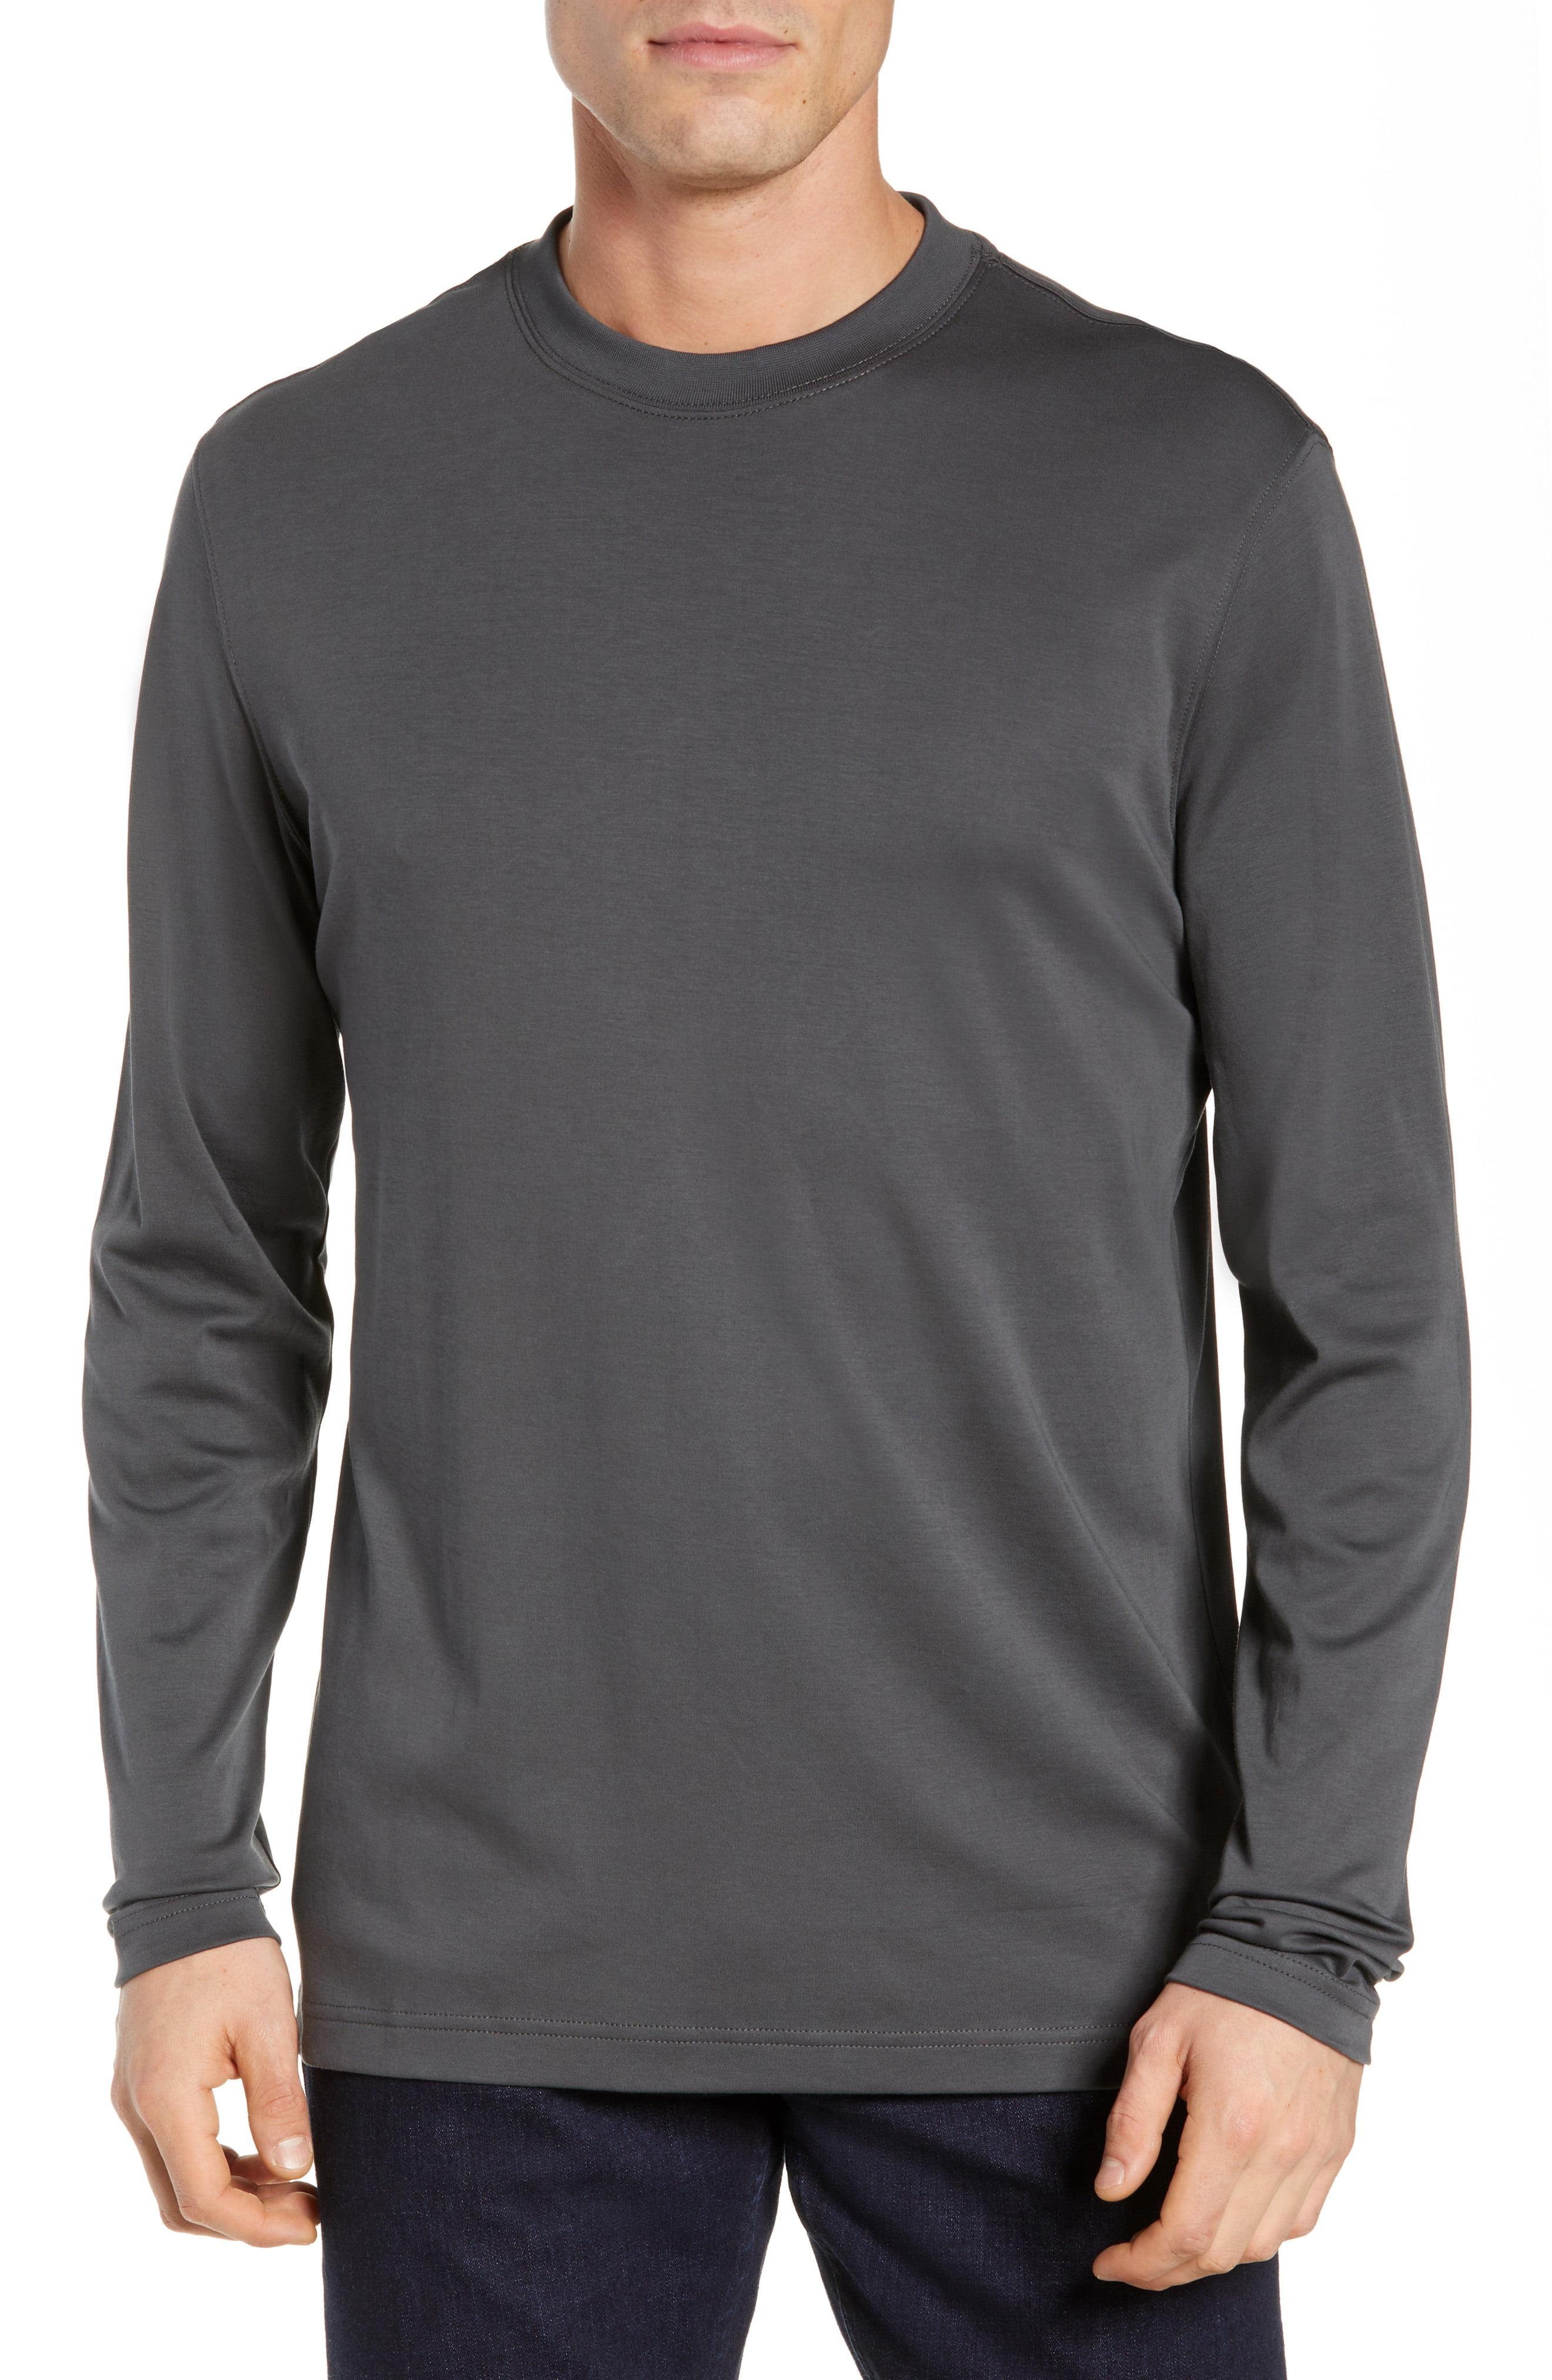 Robert Barakett Cotton Georgia T-shirt in Grey (Gray) for Men - Save 61 ...